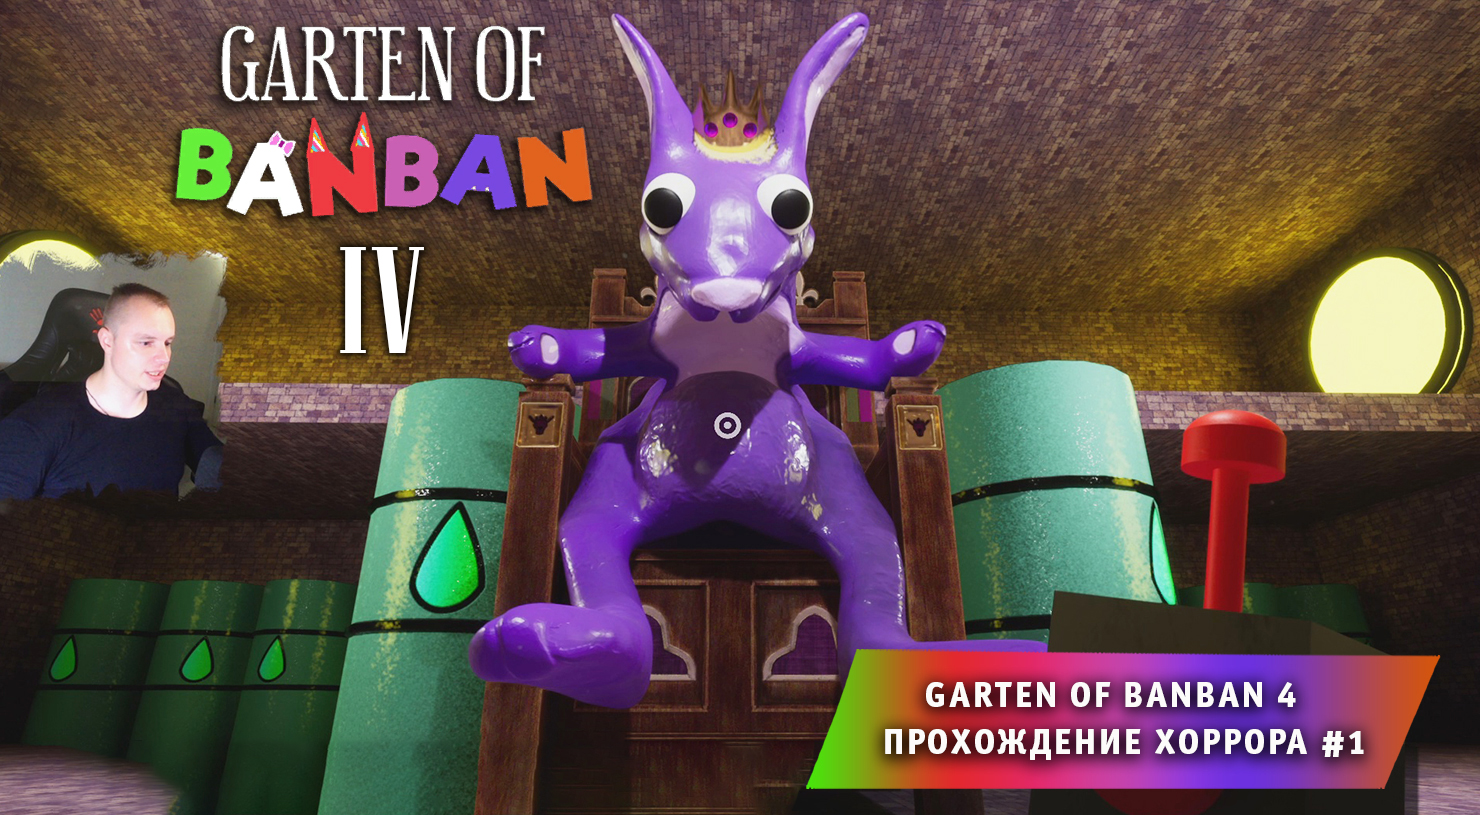 Бан бан игра 1. Банбан 4. Garden of ban ban 4. Гарден оф Банбан Банбан. Garden of Banban игра.